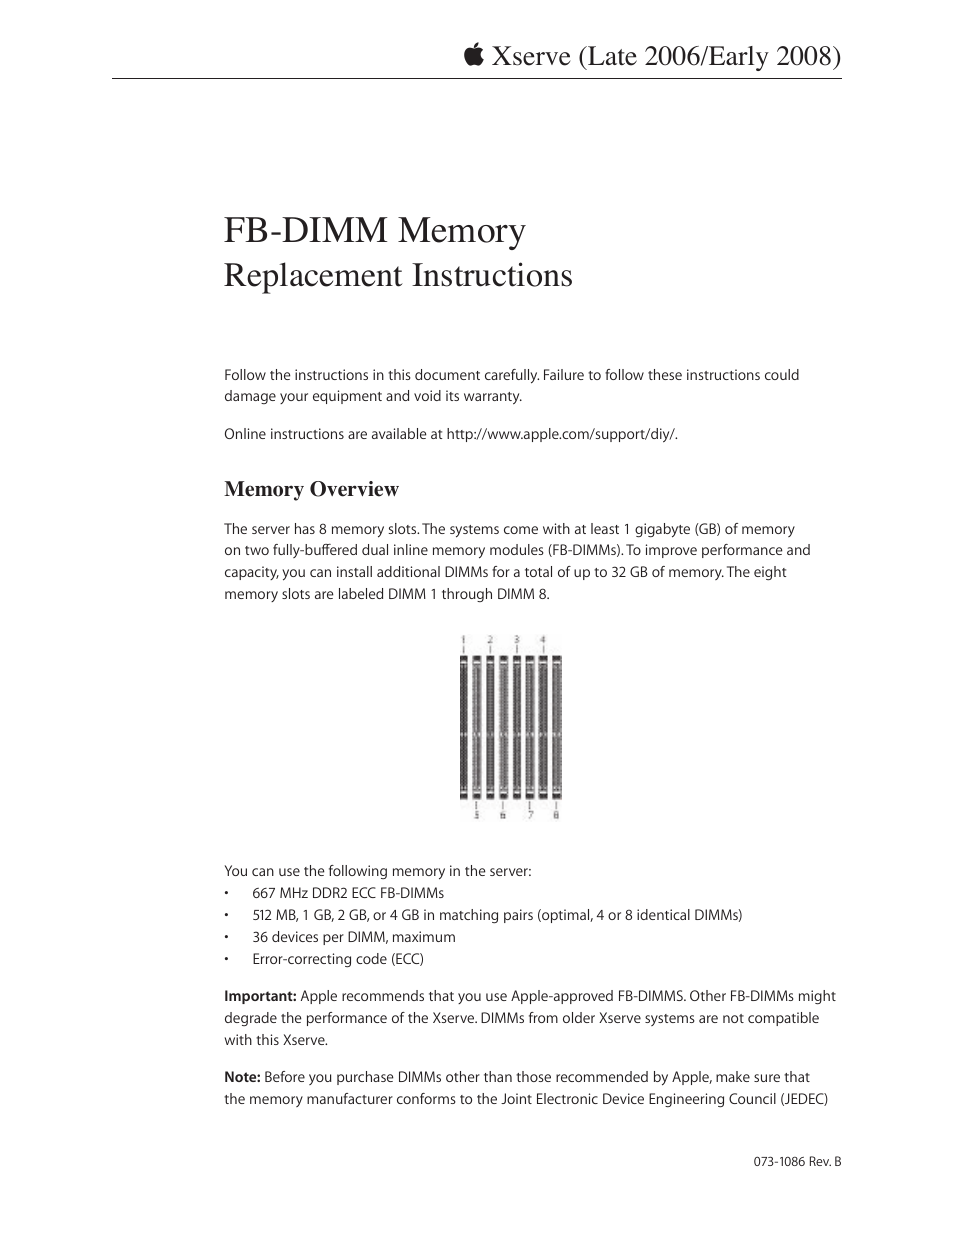 Xserve (Early 2008) DIY Procedure for FB-DIMM Memory